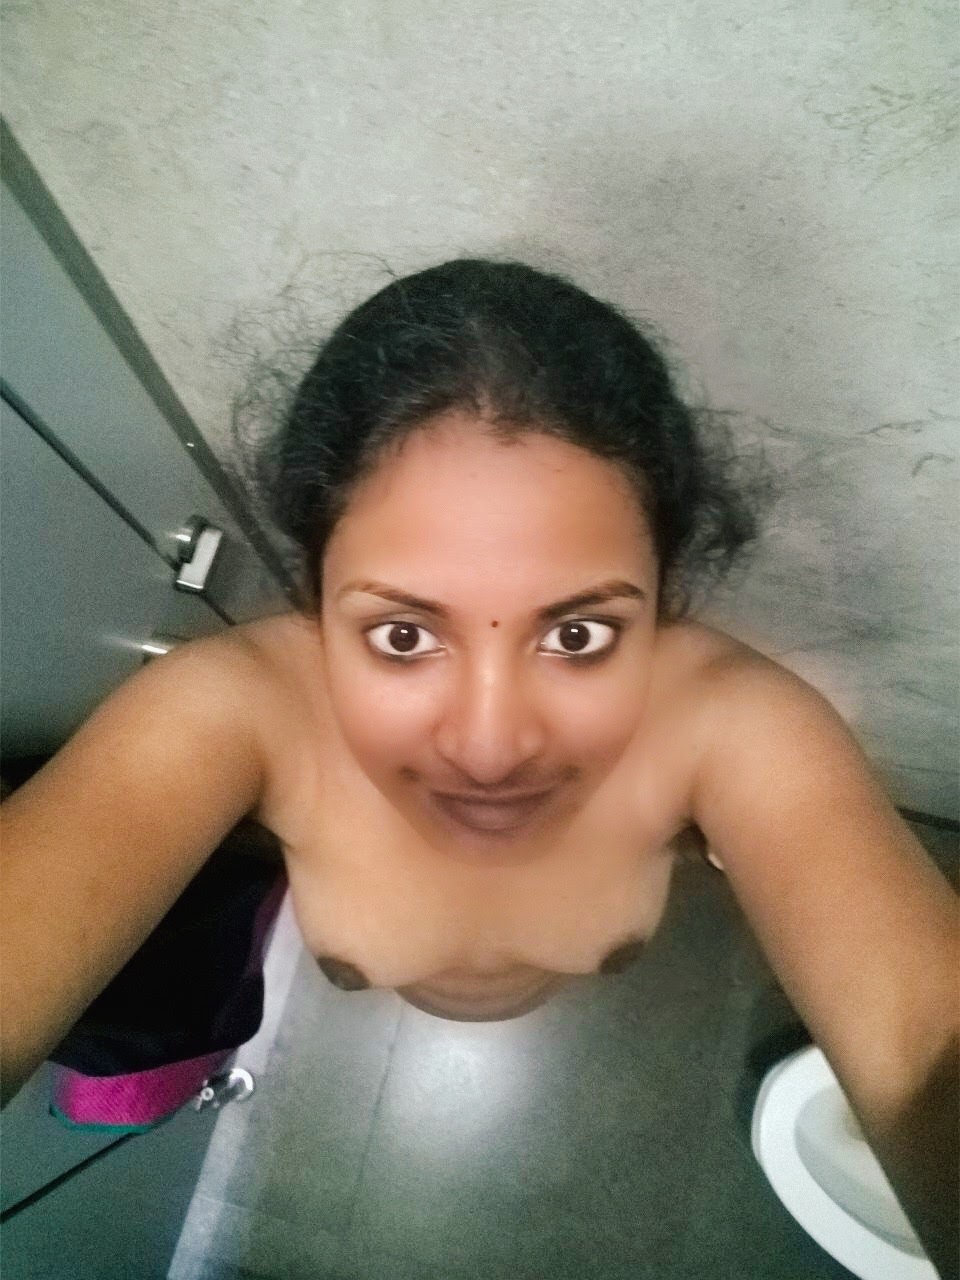 Nude Indian College Girl Boobs